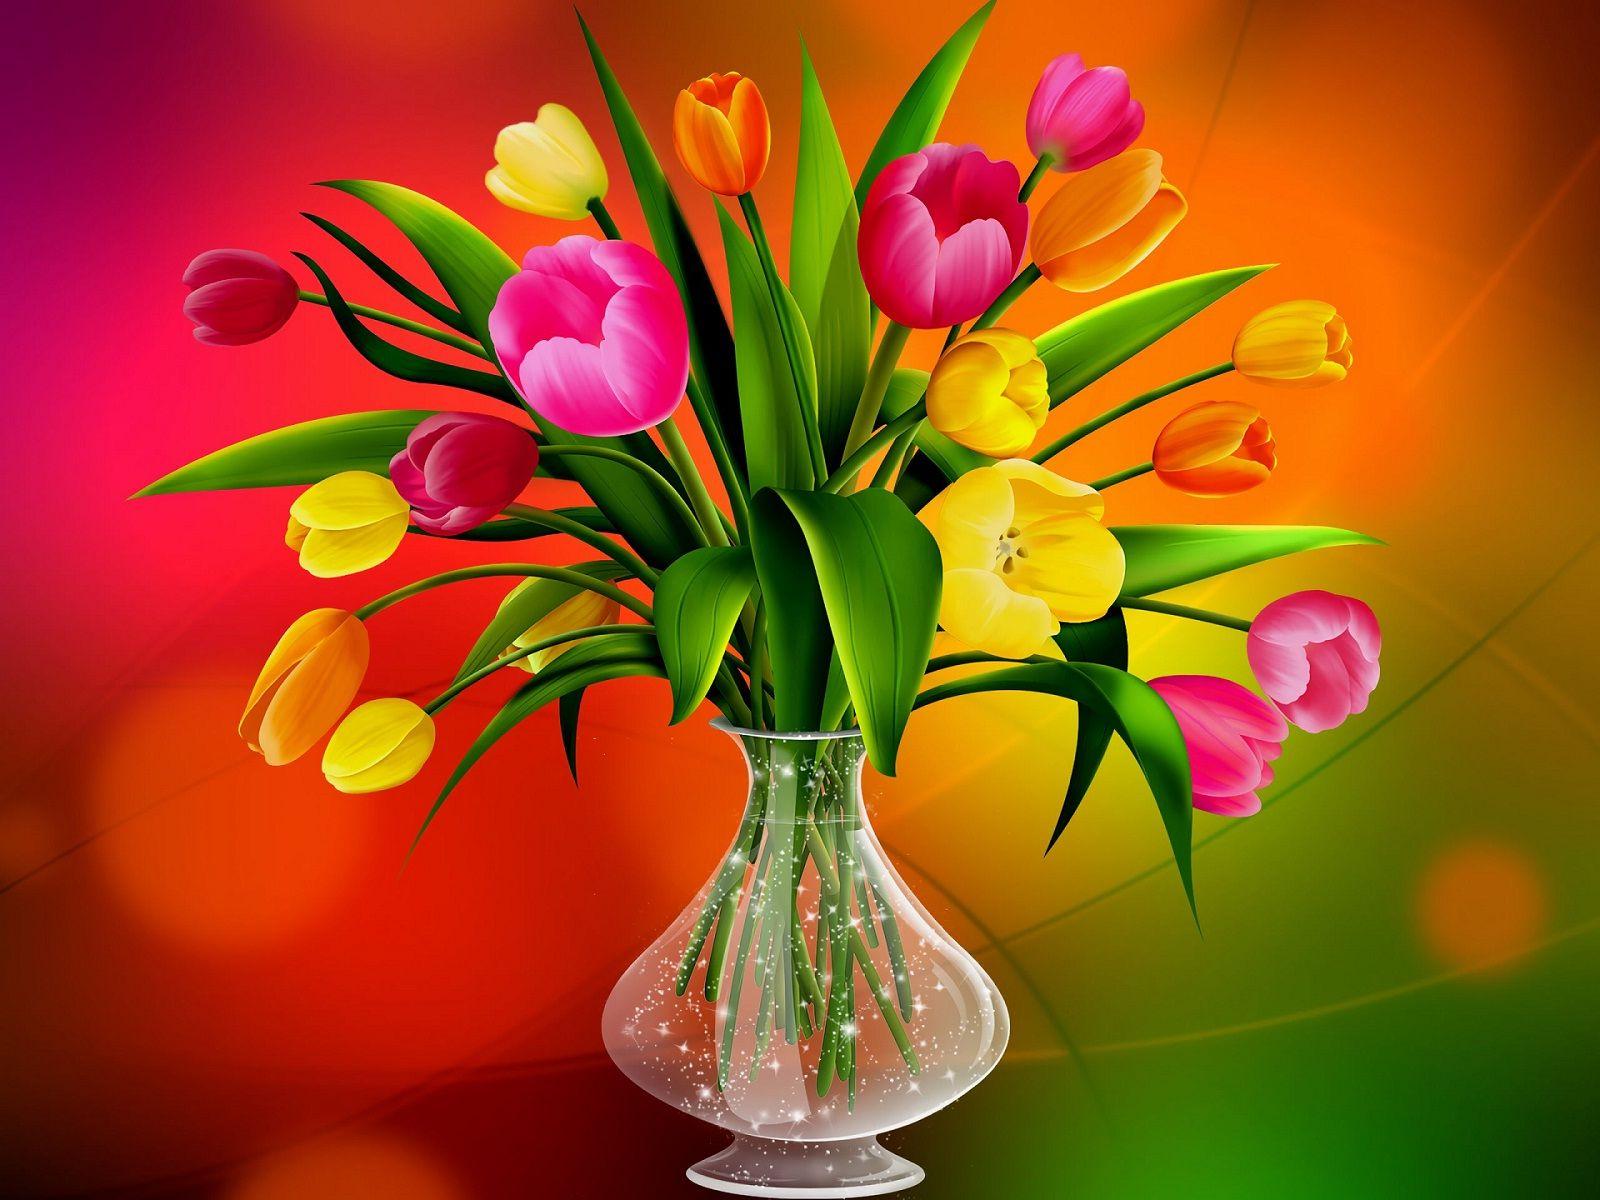 Tulip flowers in the glass pot marvelous wallpaper. HD Wallpaper